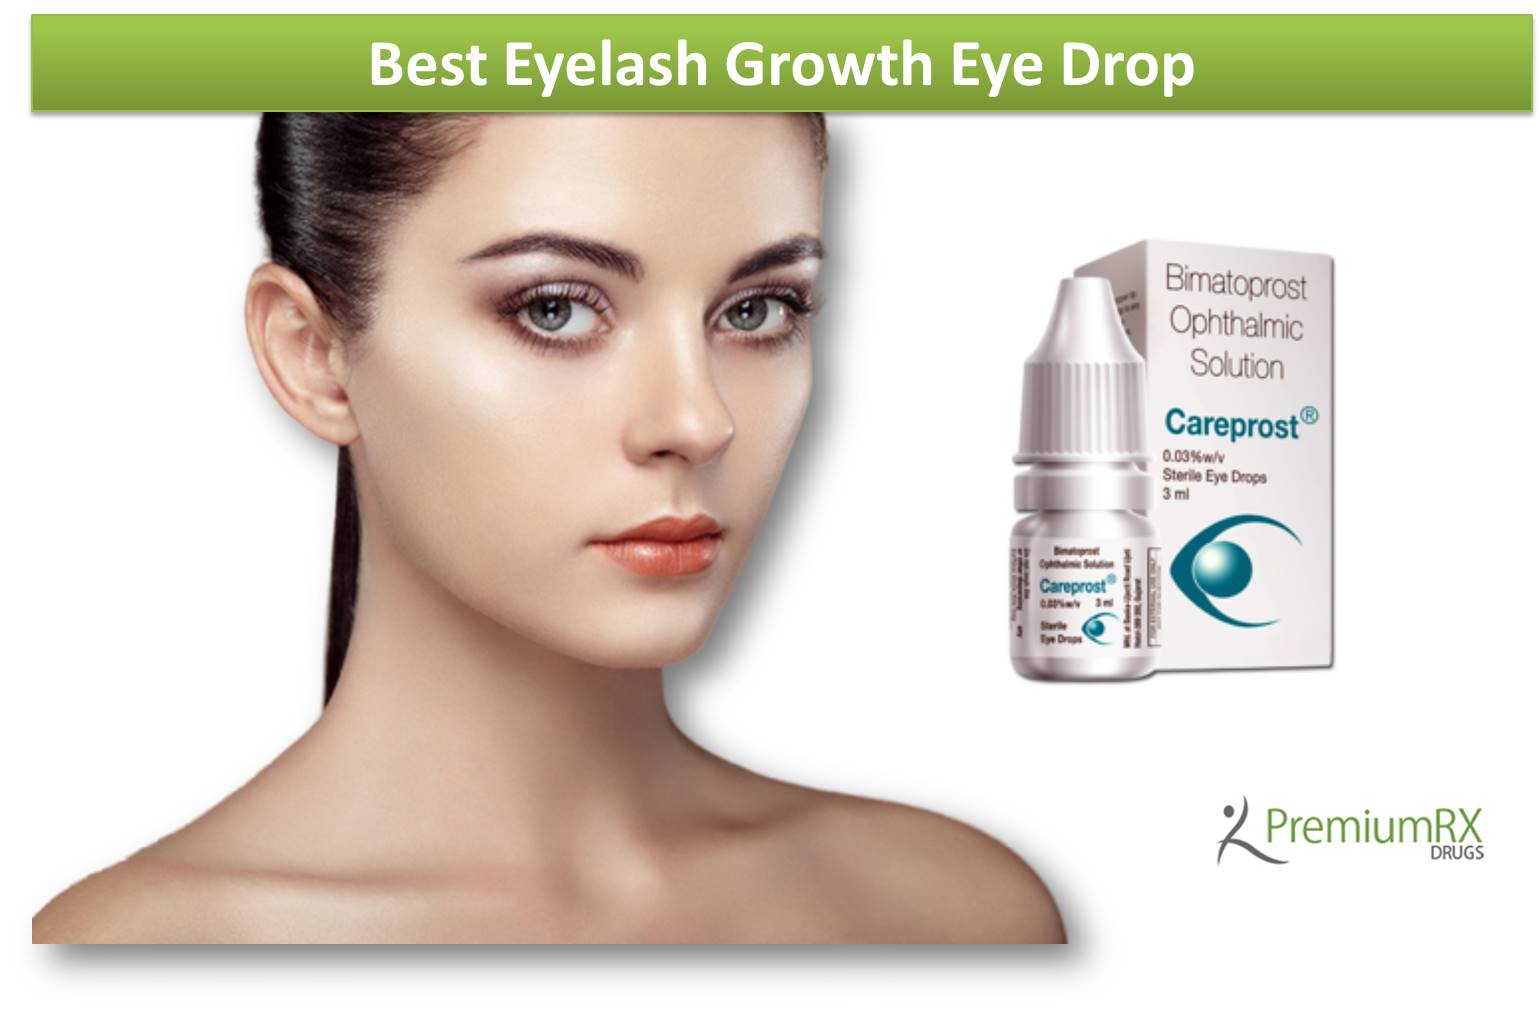 What Eye Drops Make Your Eyelashes Grow?﻿